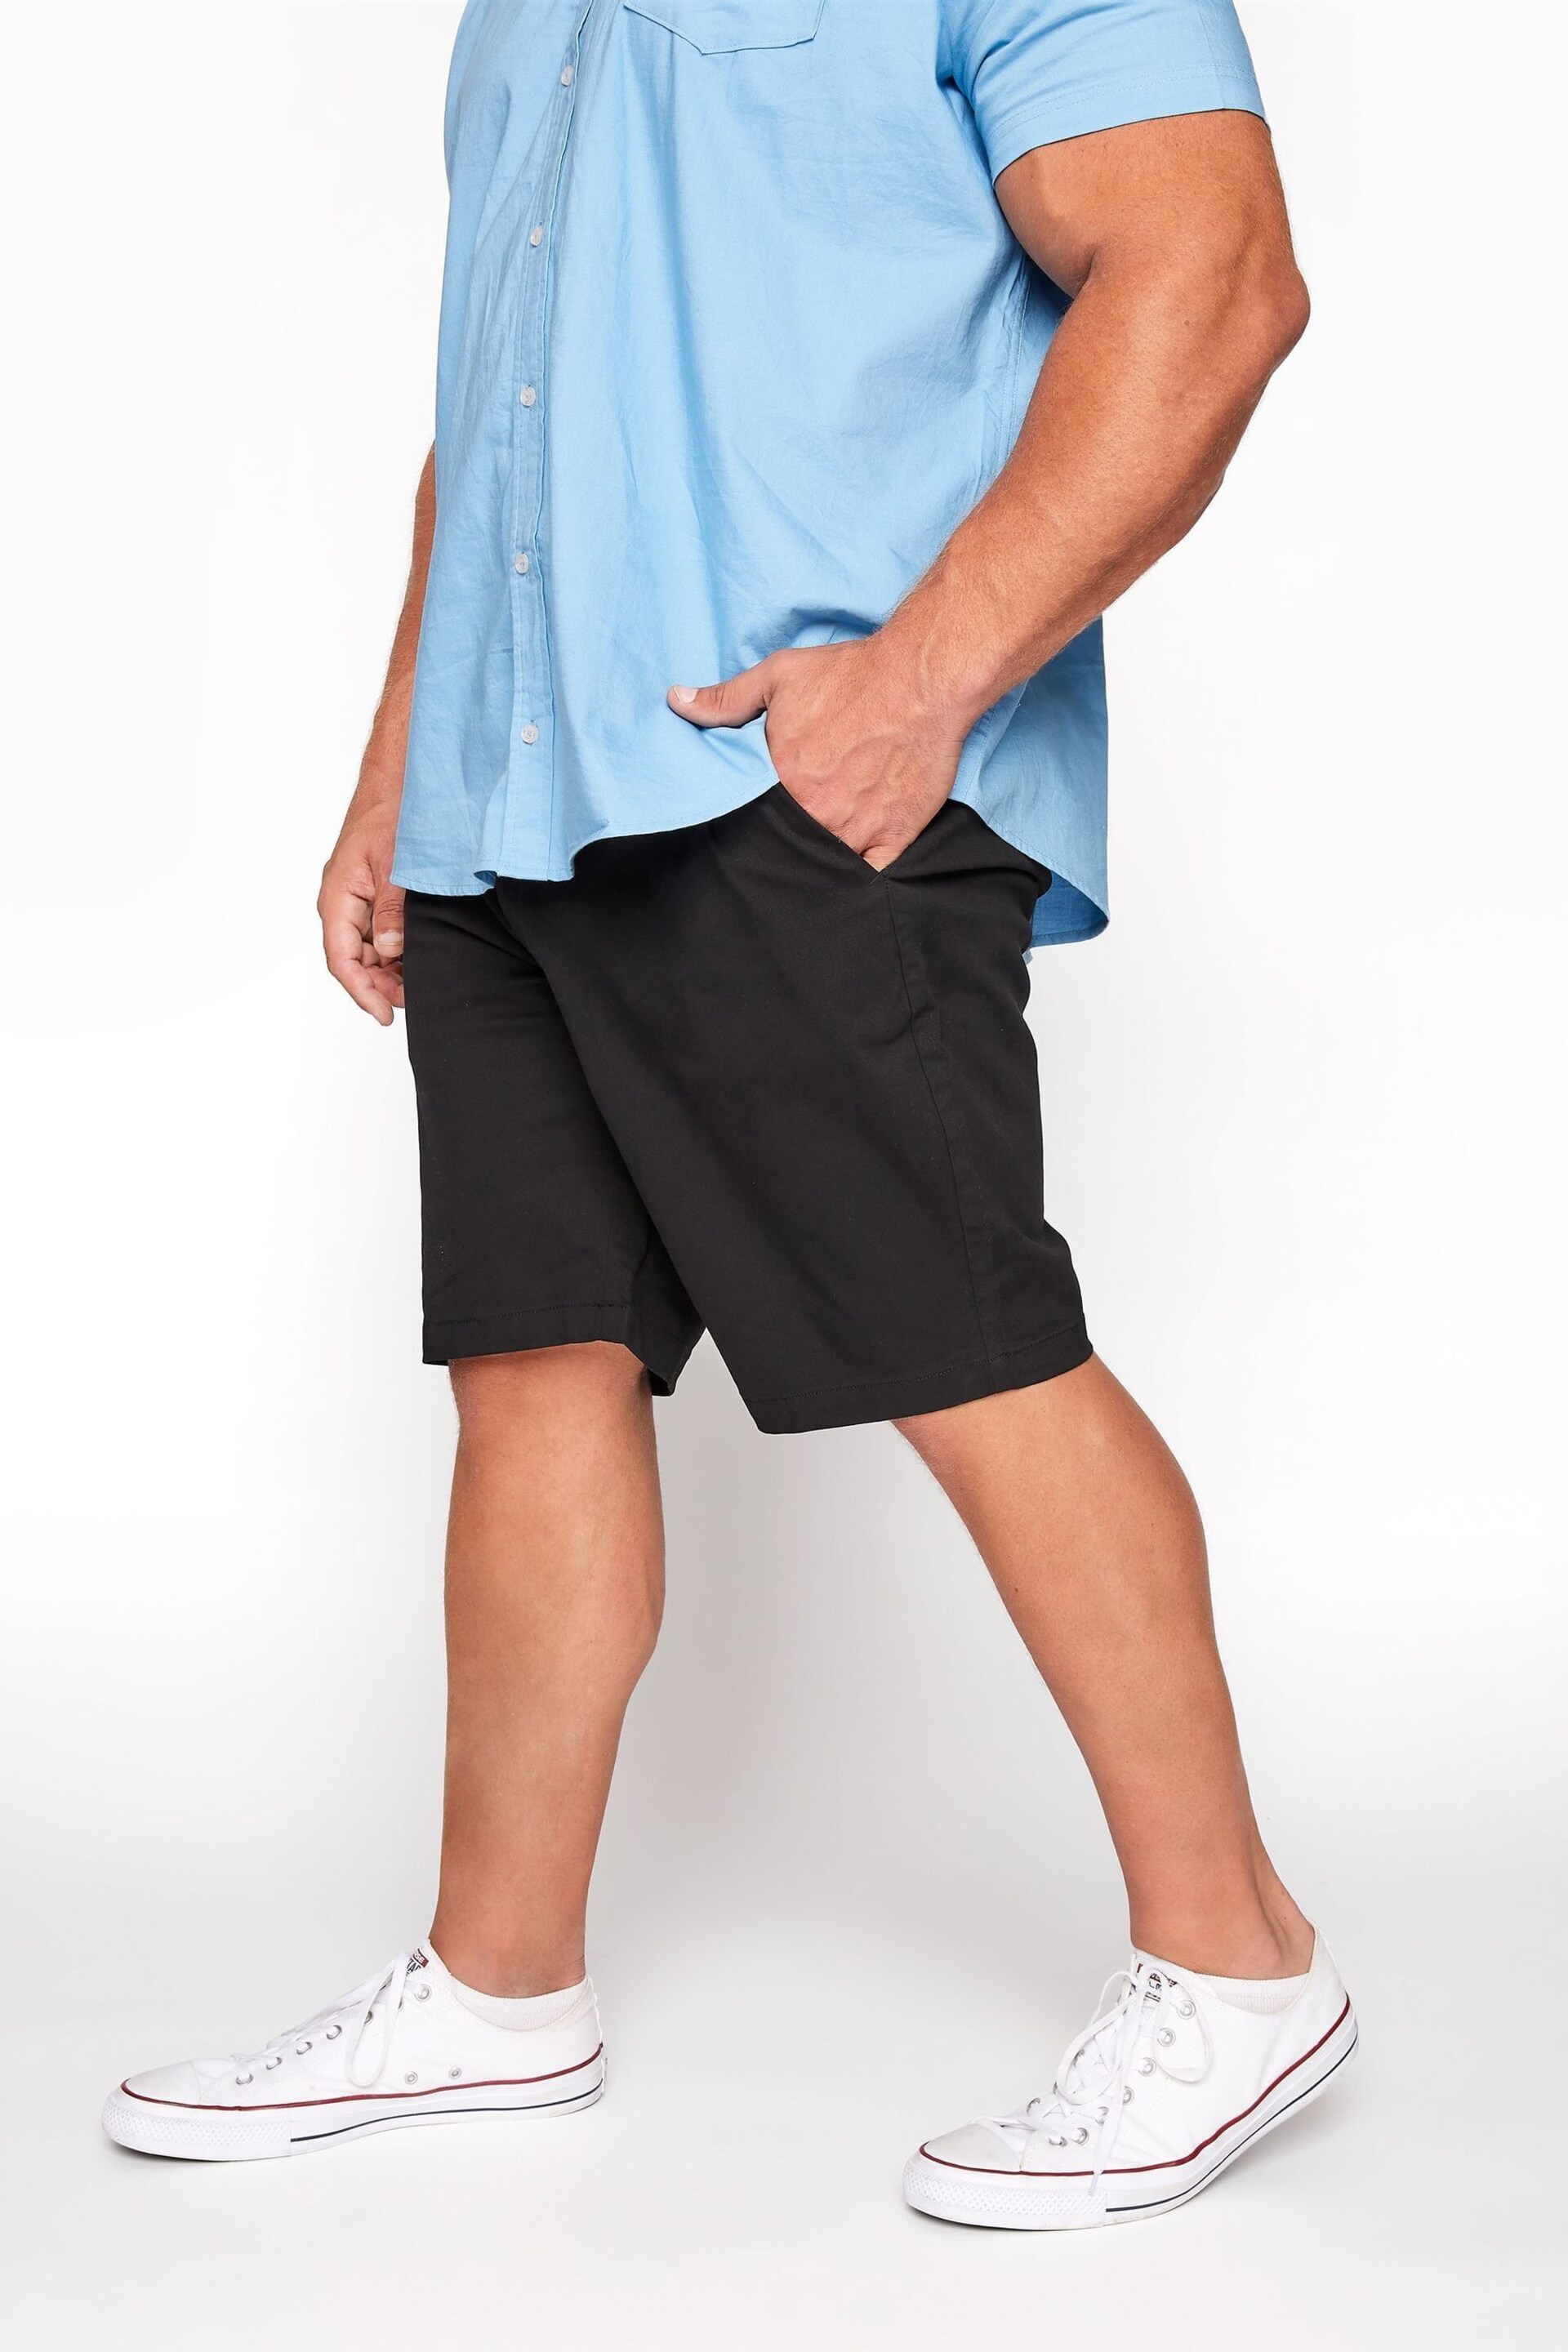 BadRhino Big & Tall Black Stretch Chino Shorts - Image 3 of 6